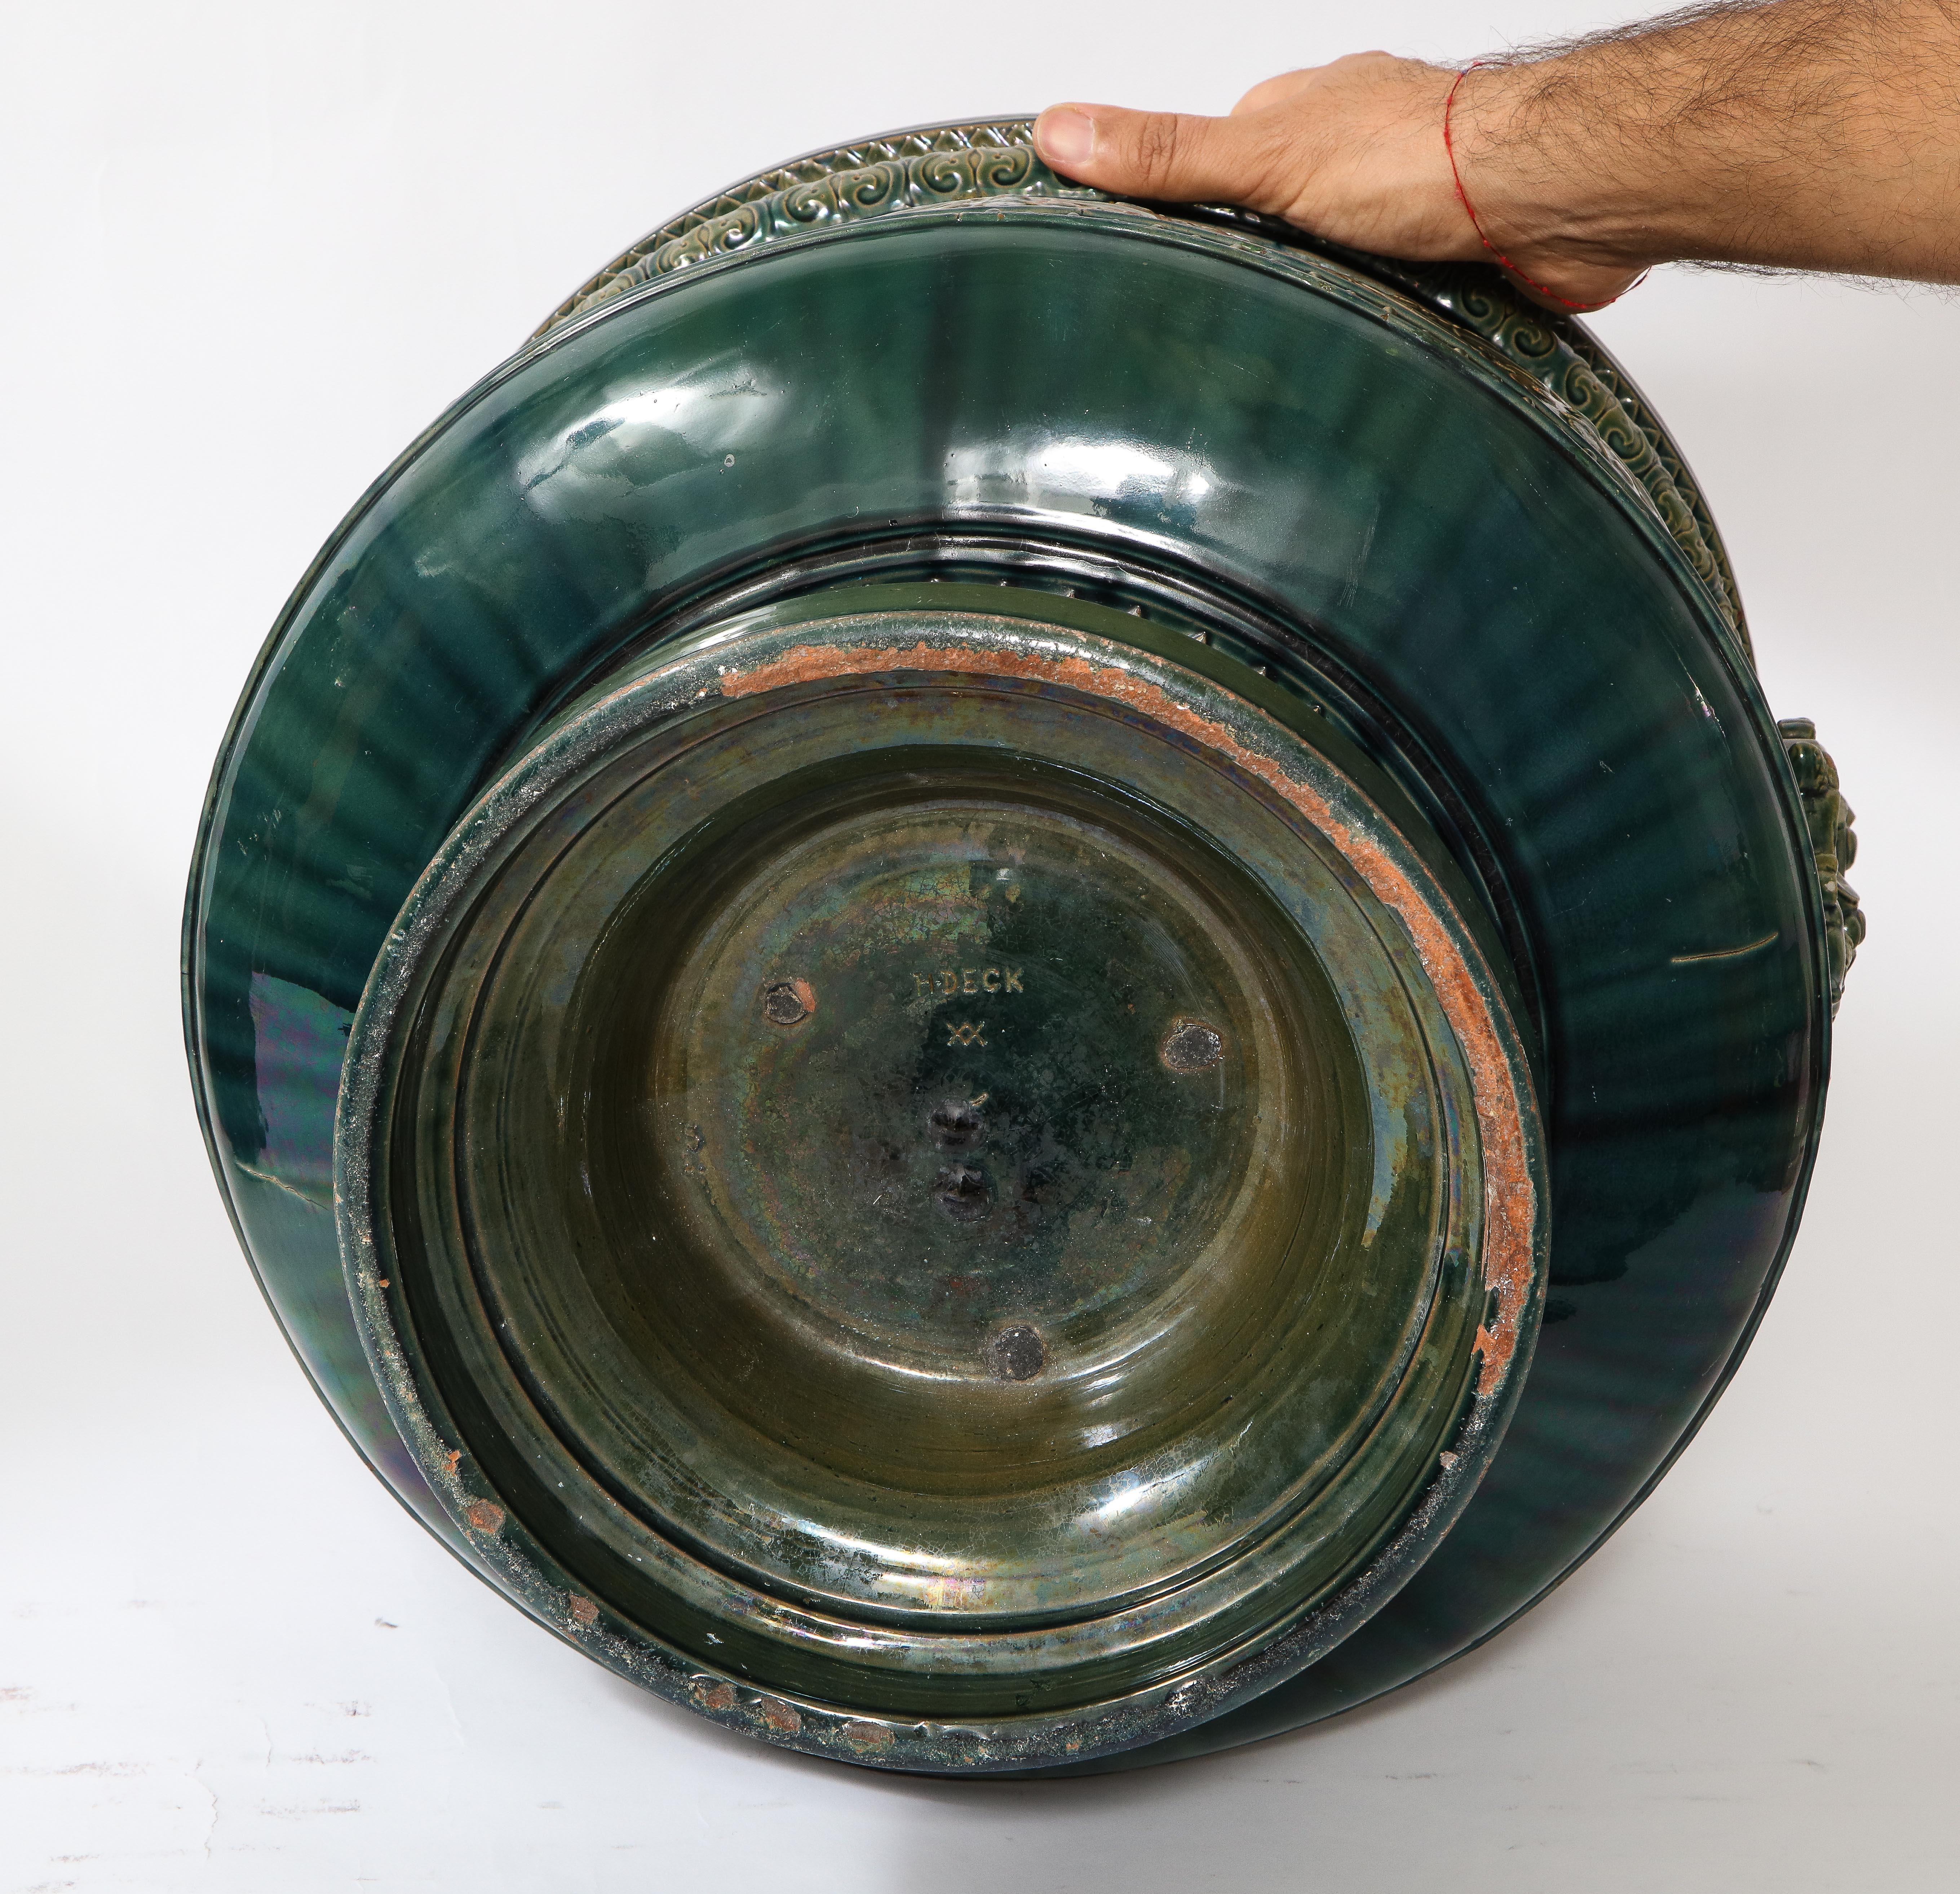 Theodore Deck Islamic/Alhambra Style Green-Glazed Earthenware Vase on Pedestal 11